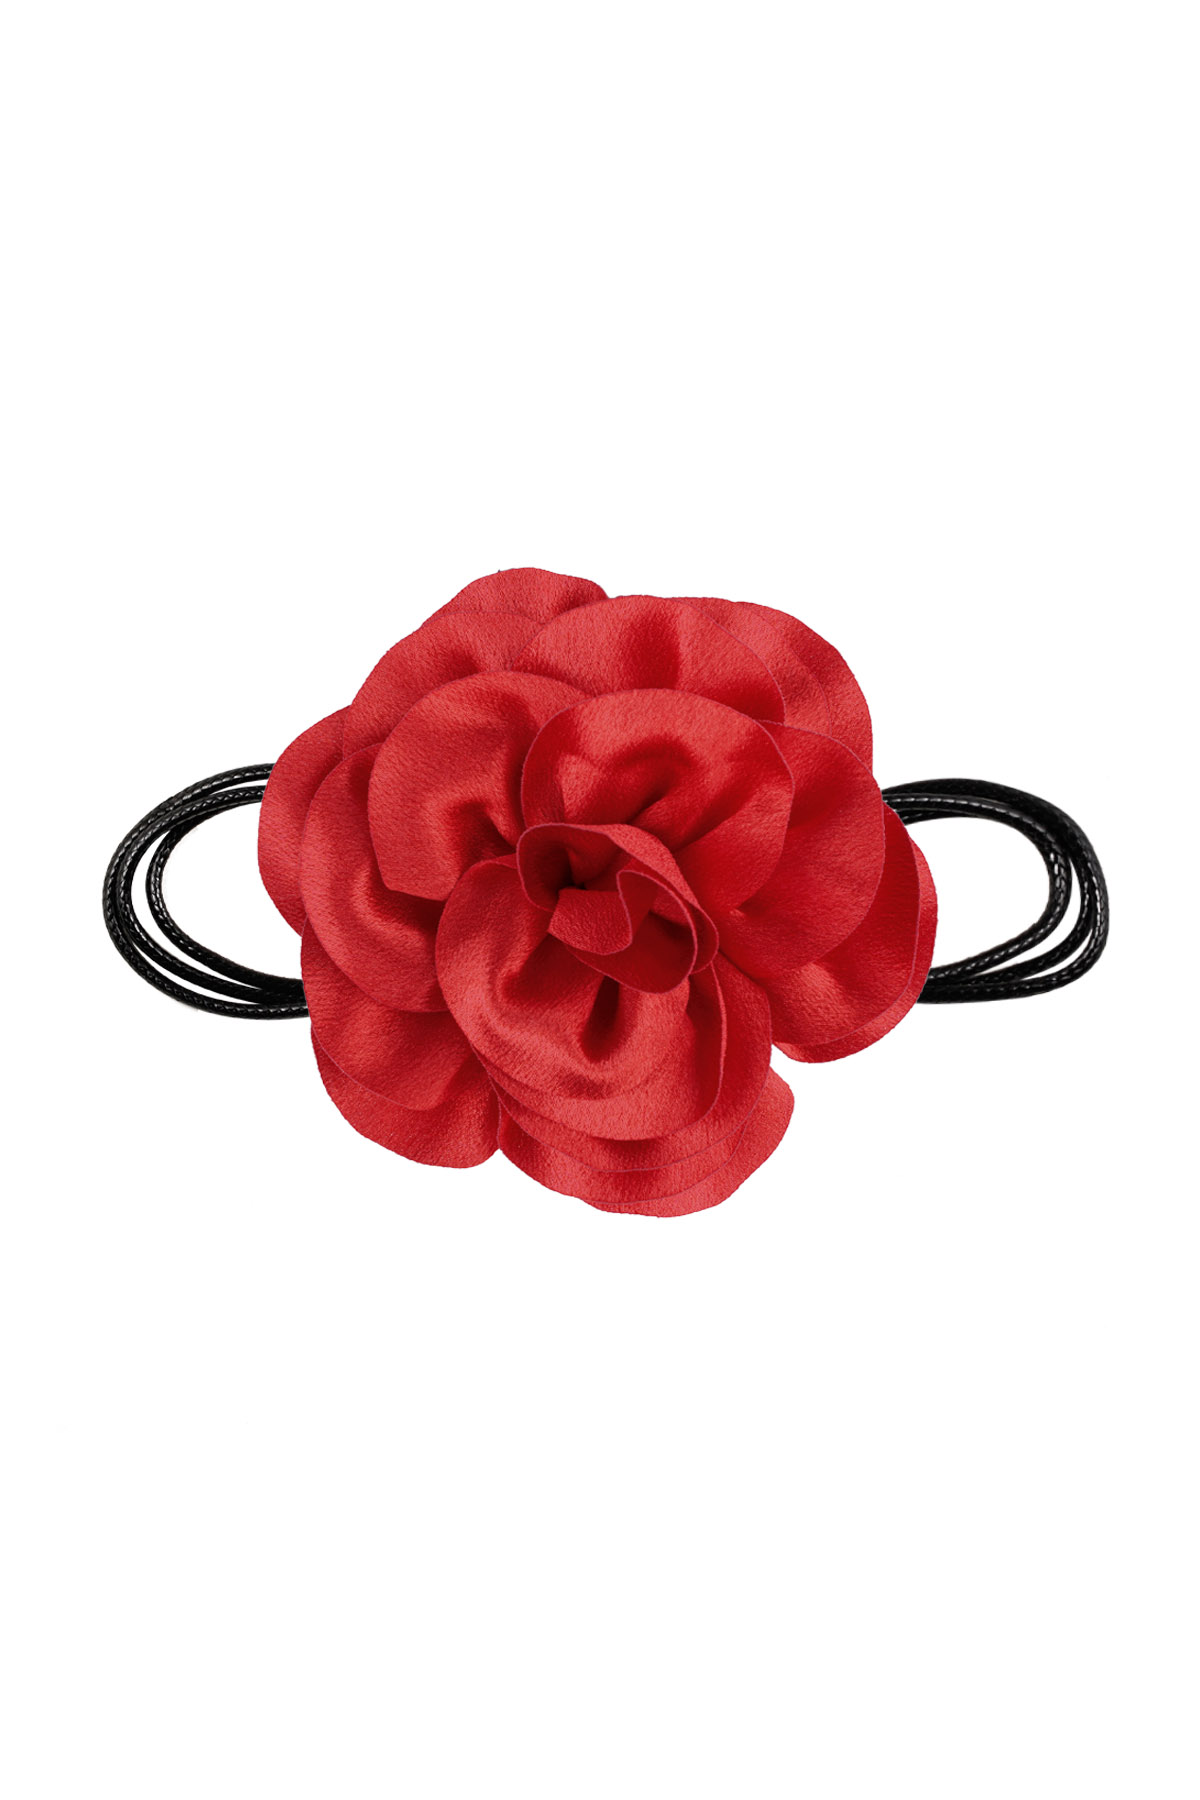 Collier corde fleur brillante - rouge h5 